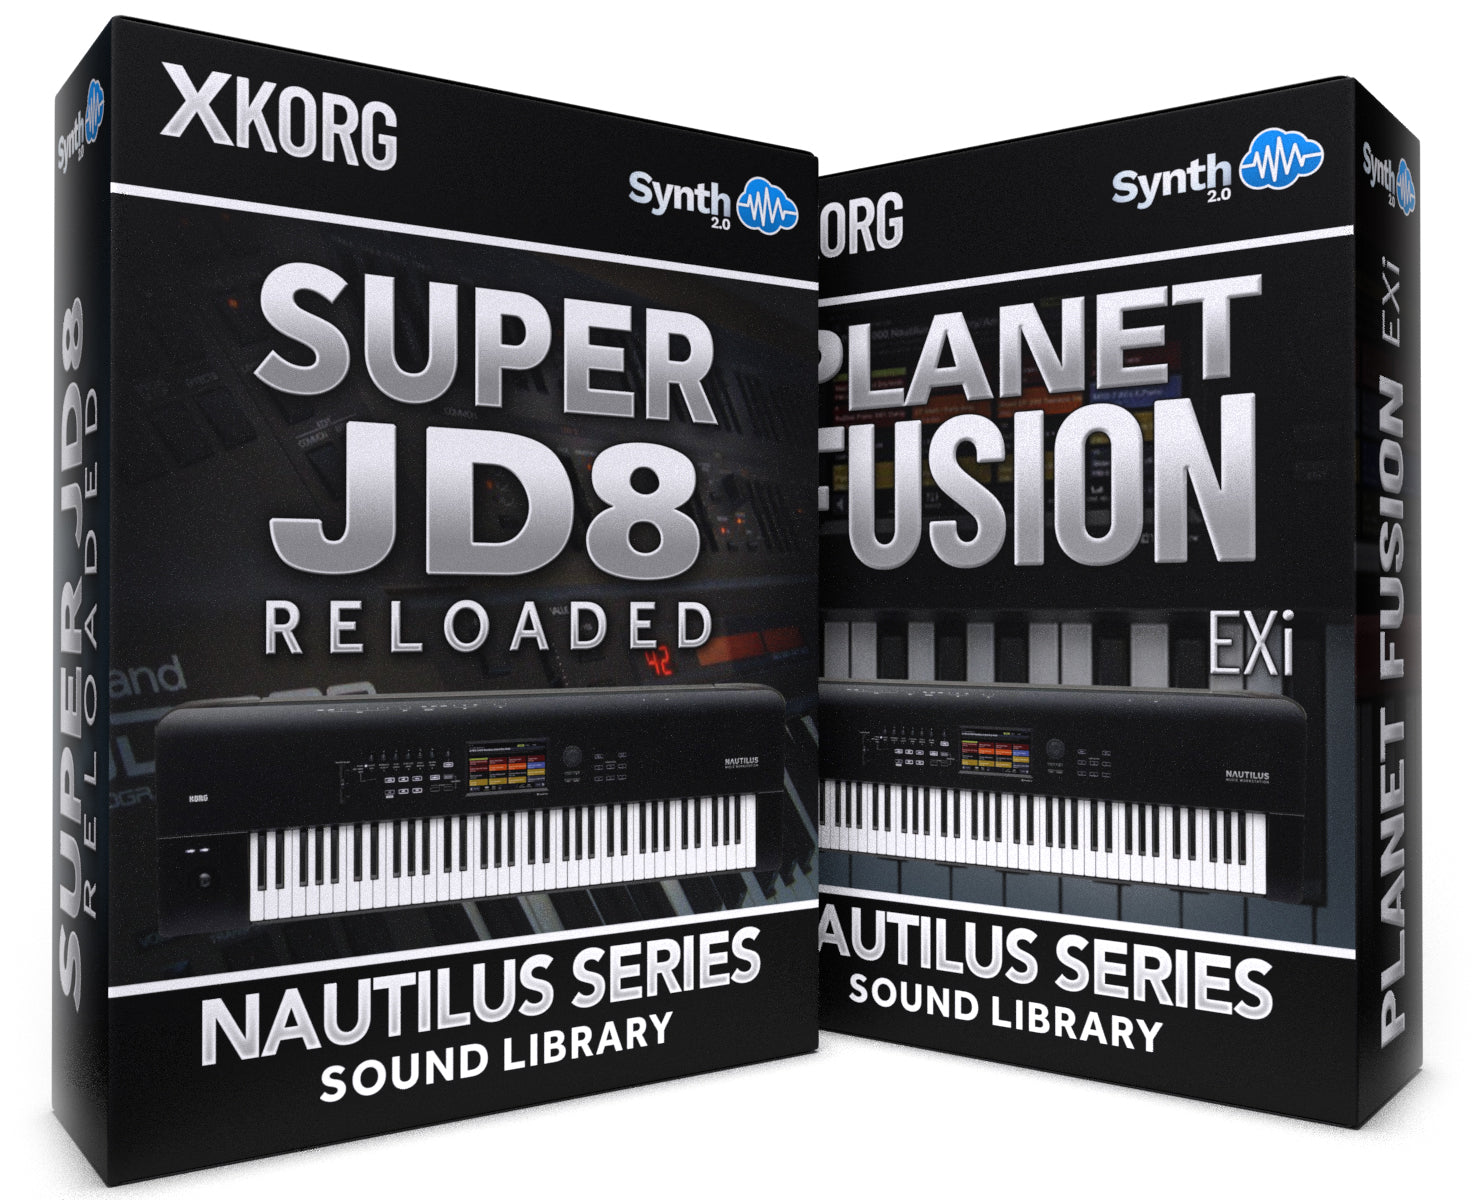 SSX137 - ( Bundle ) - Planet Fusion EXi + Super JD8 Reloaded - Korg Nautilus Series